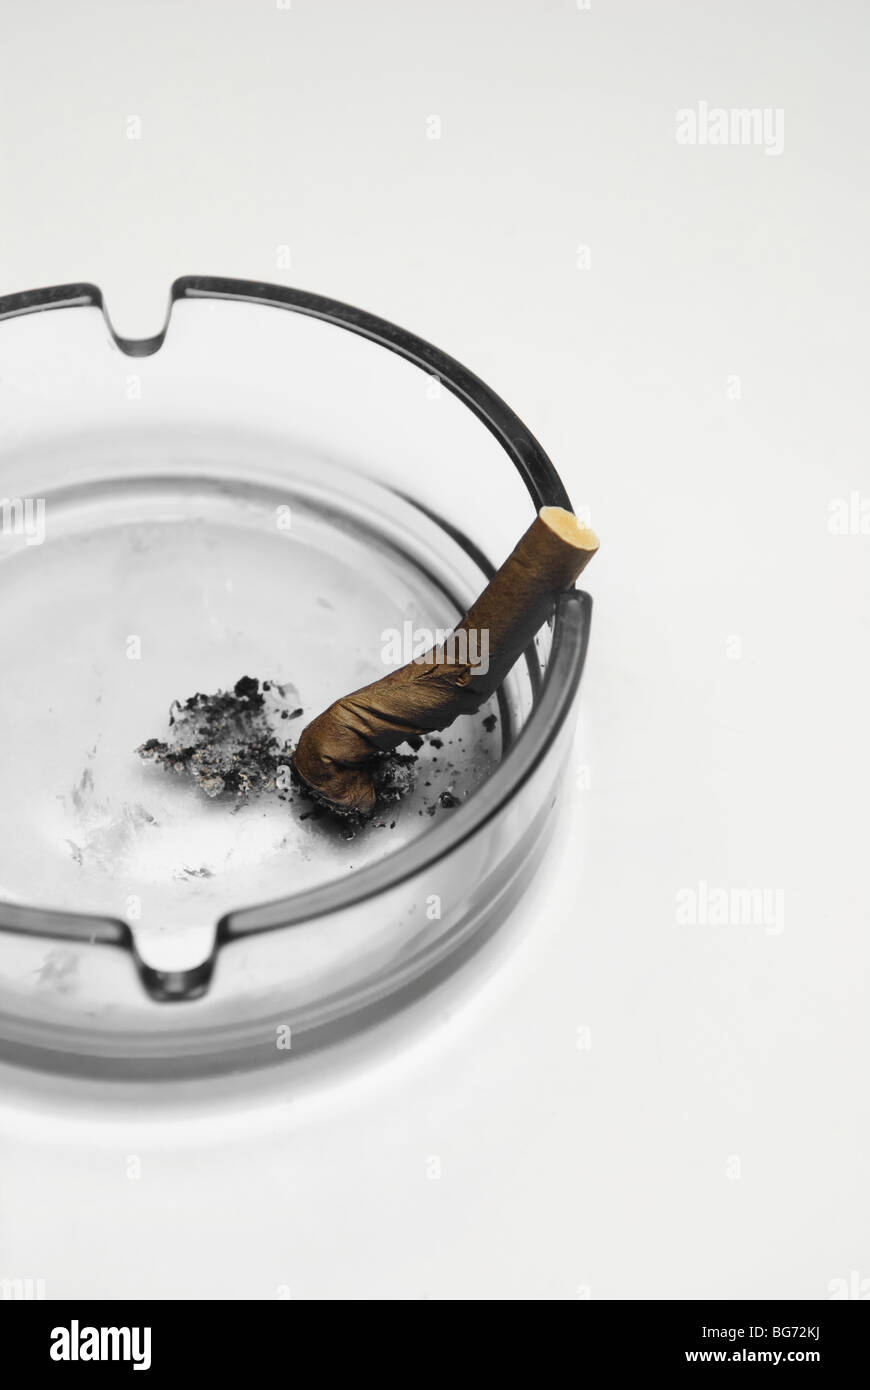 Smoking cigarette in an ashtray Stock Photo